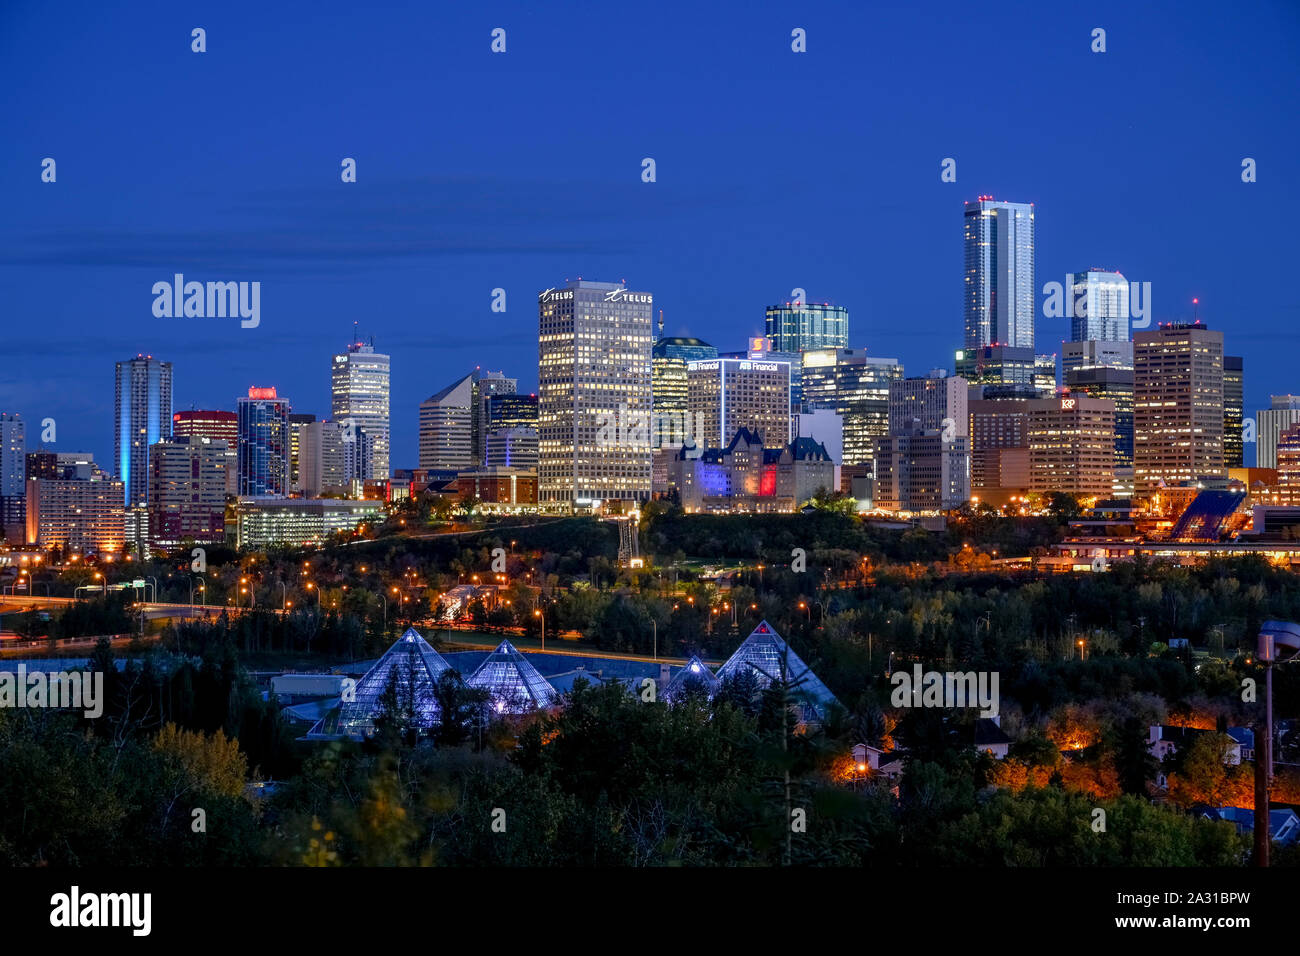 Edmonton skyline at night, Edmonton, Alberta, Canada Banque D'Images